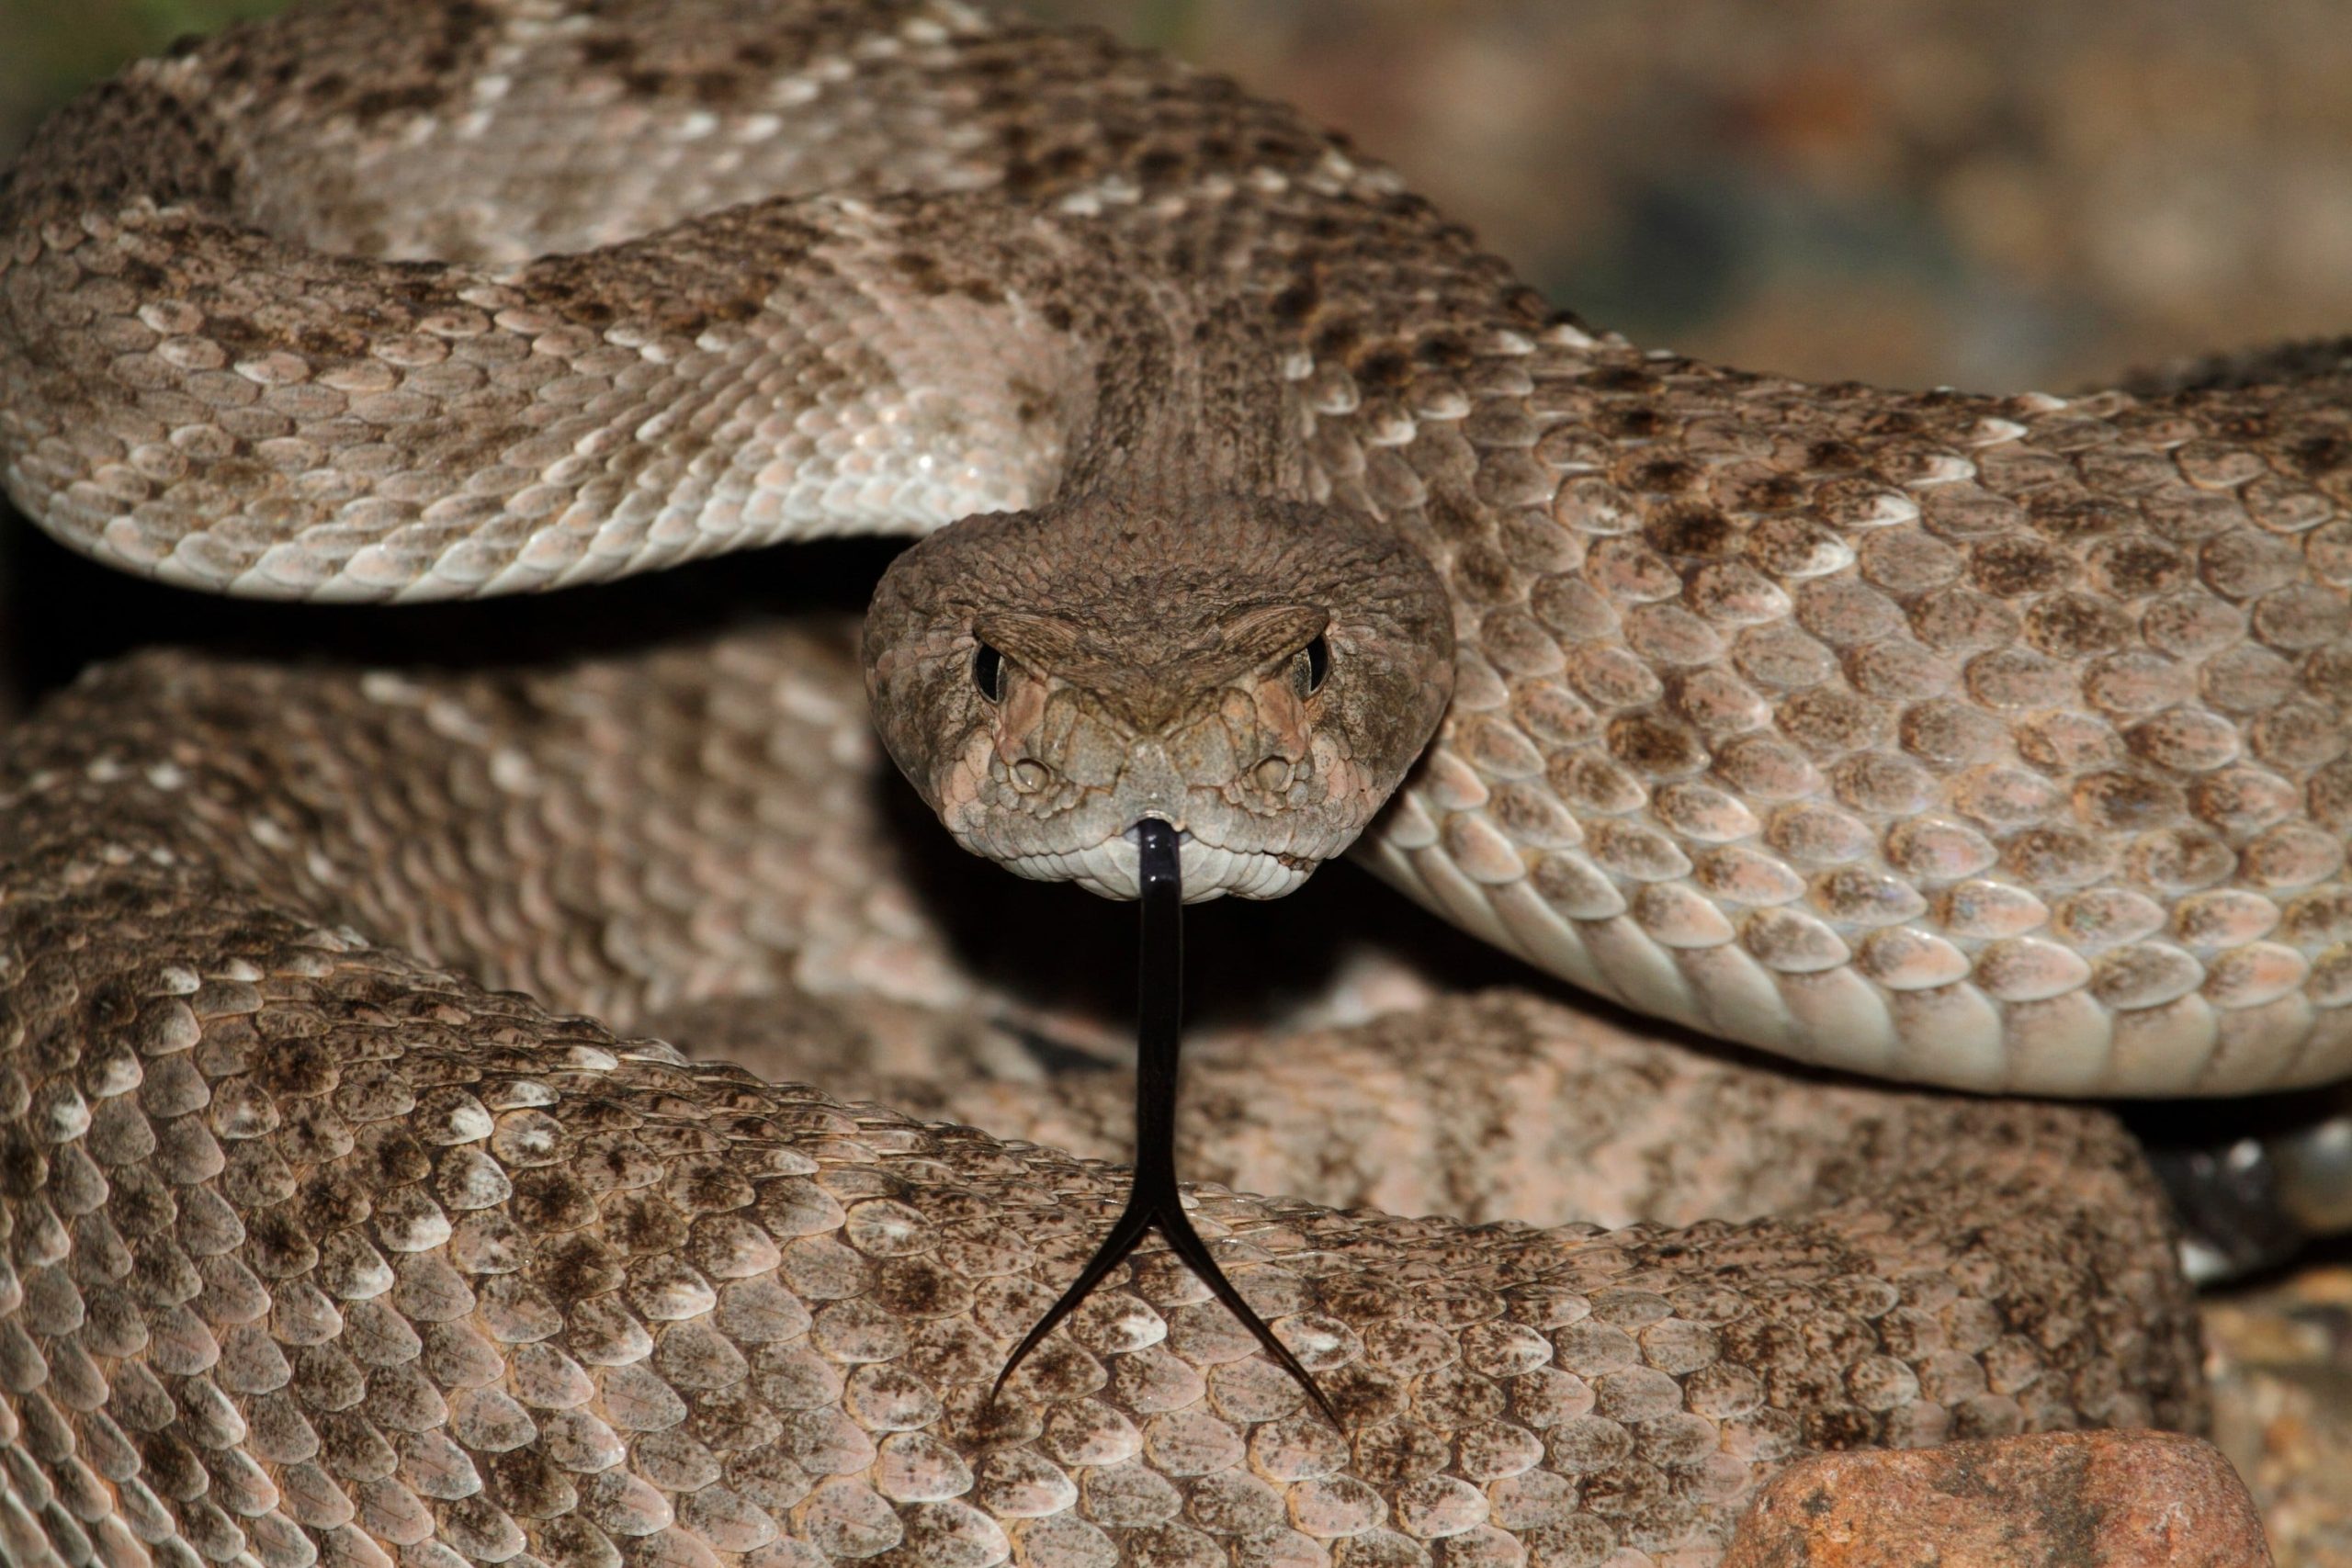 a close up of a snake